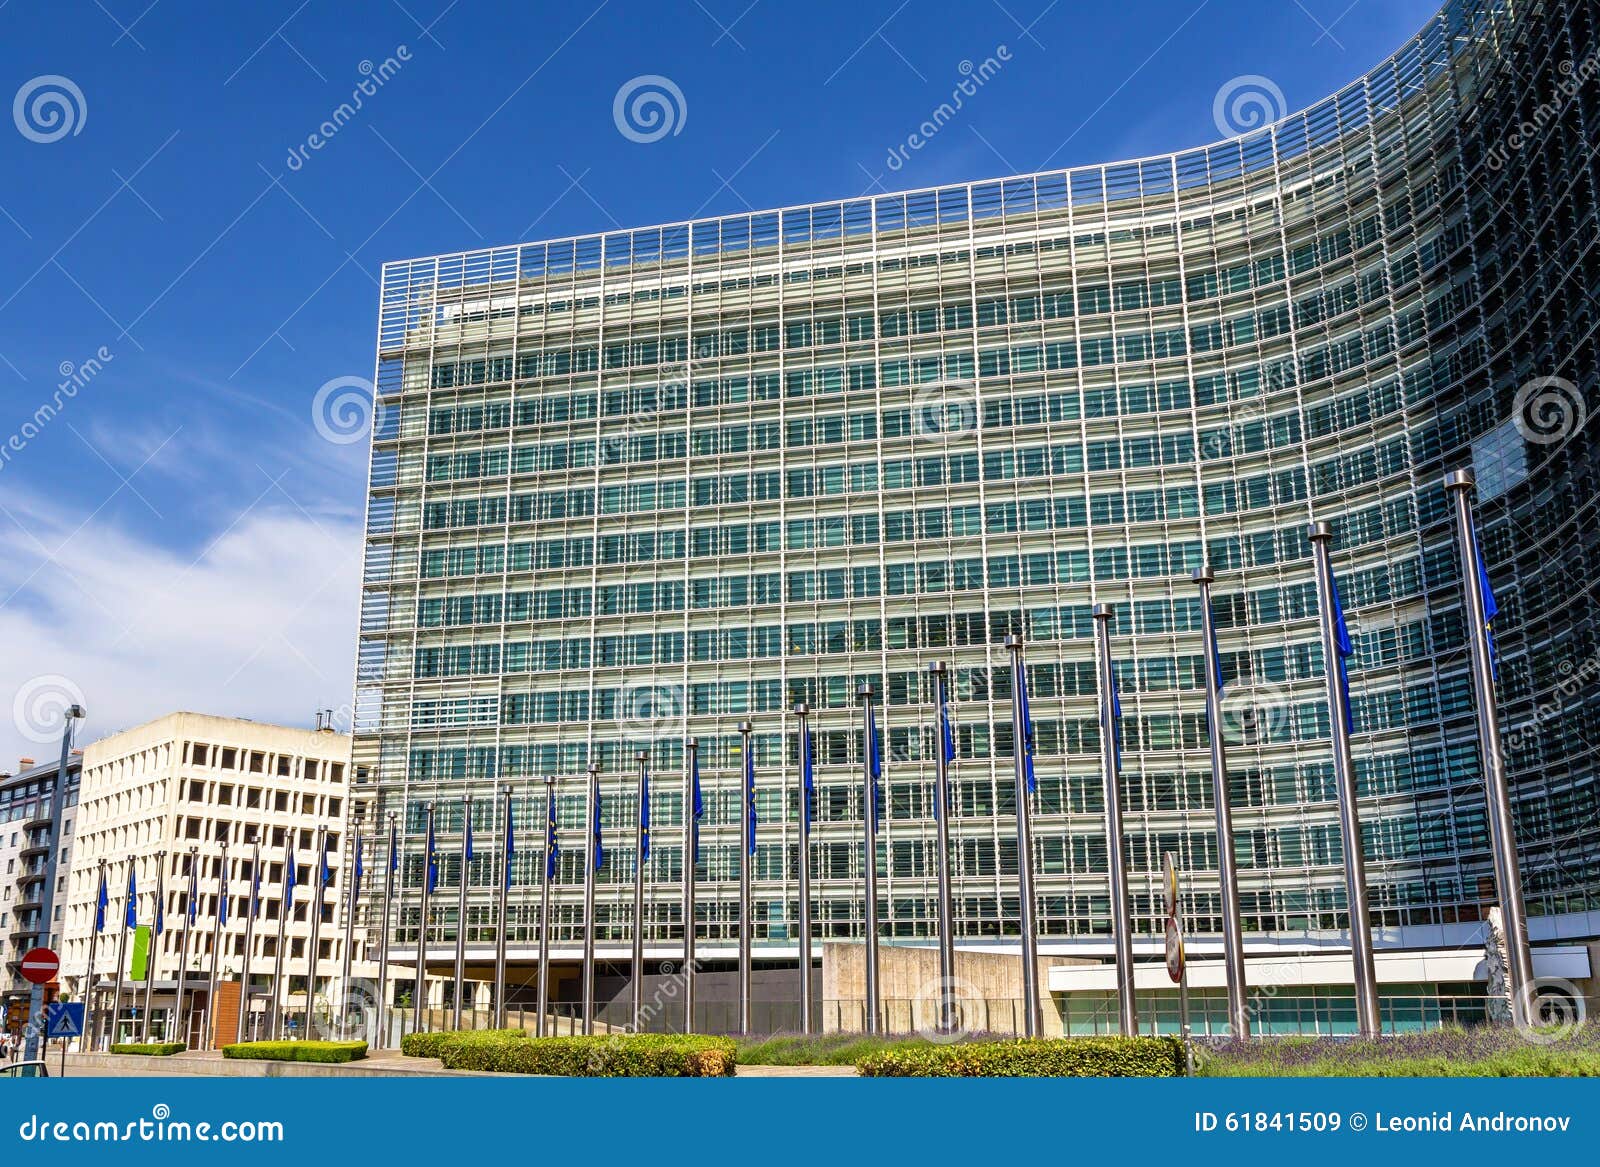 berlaymont building of european comission